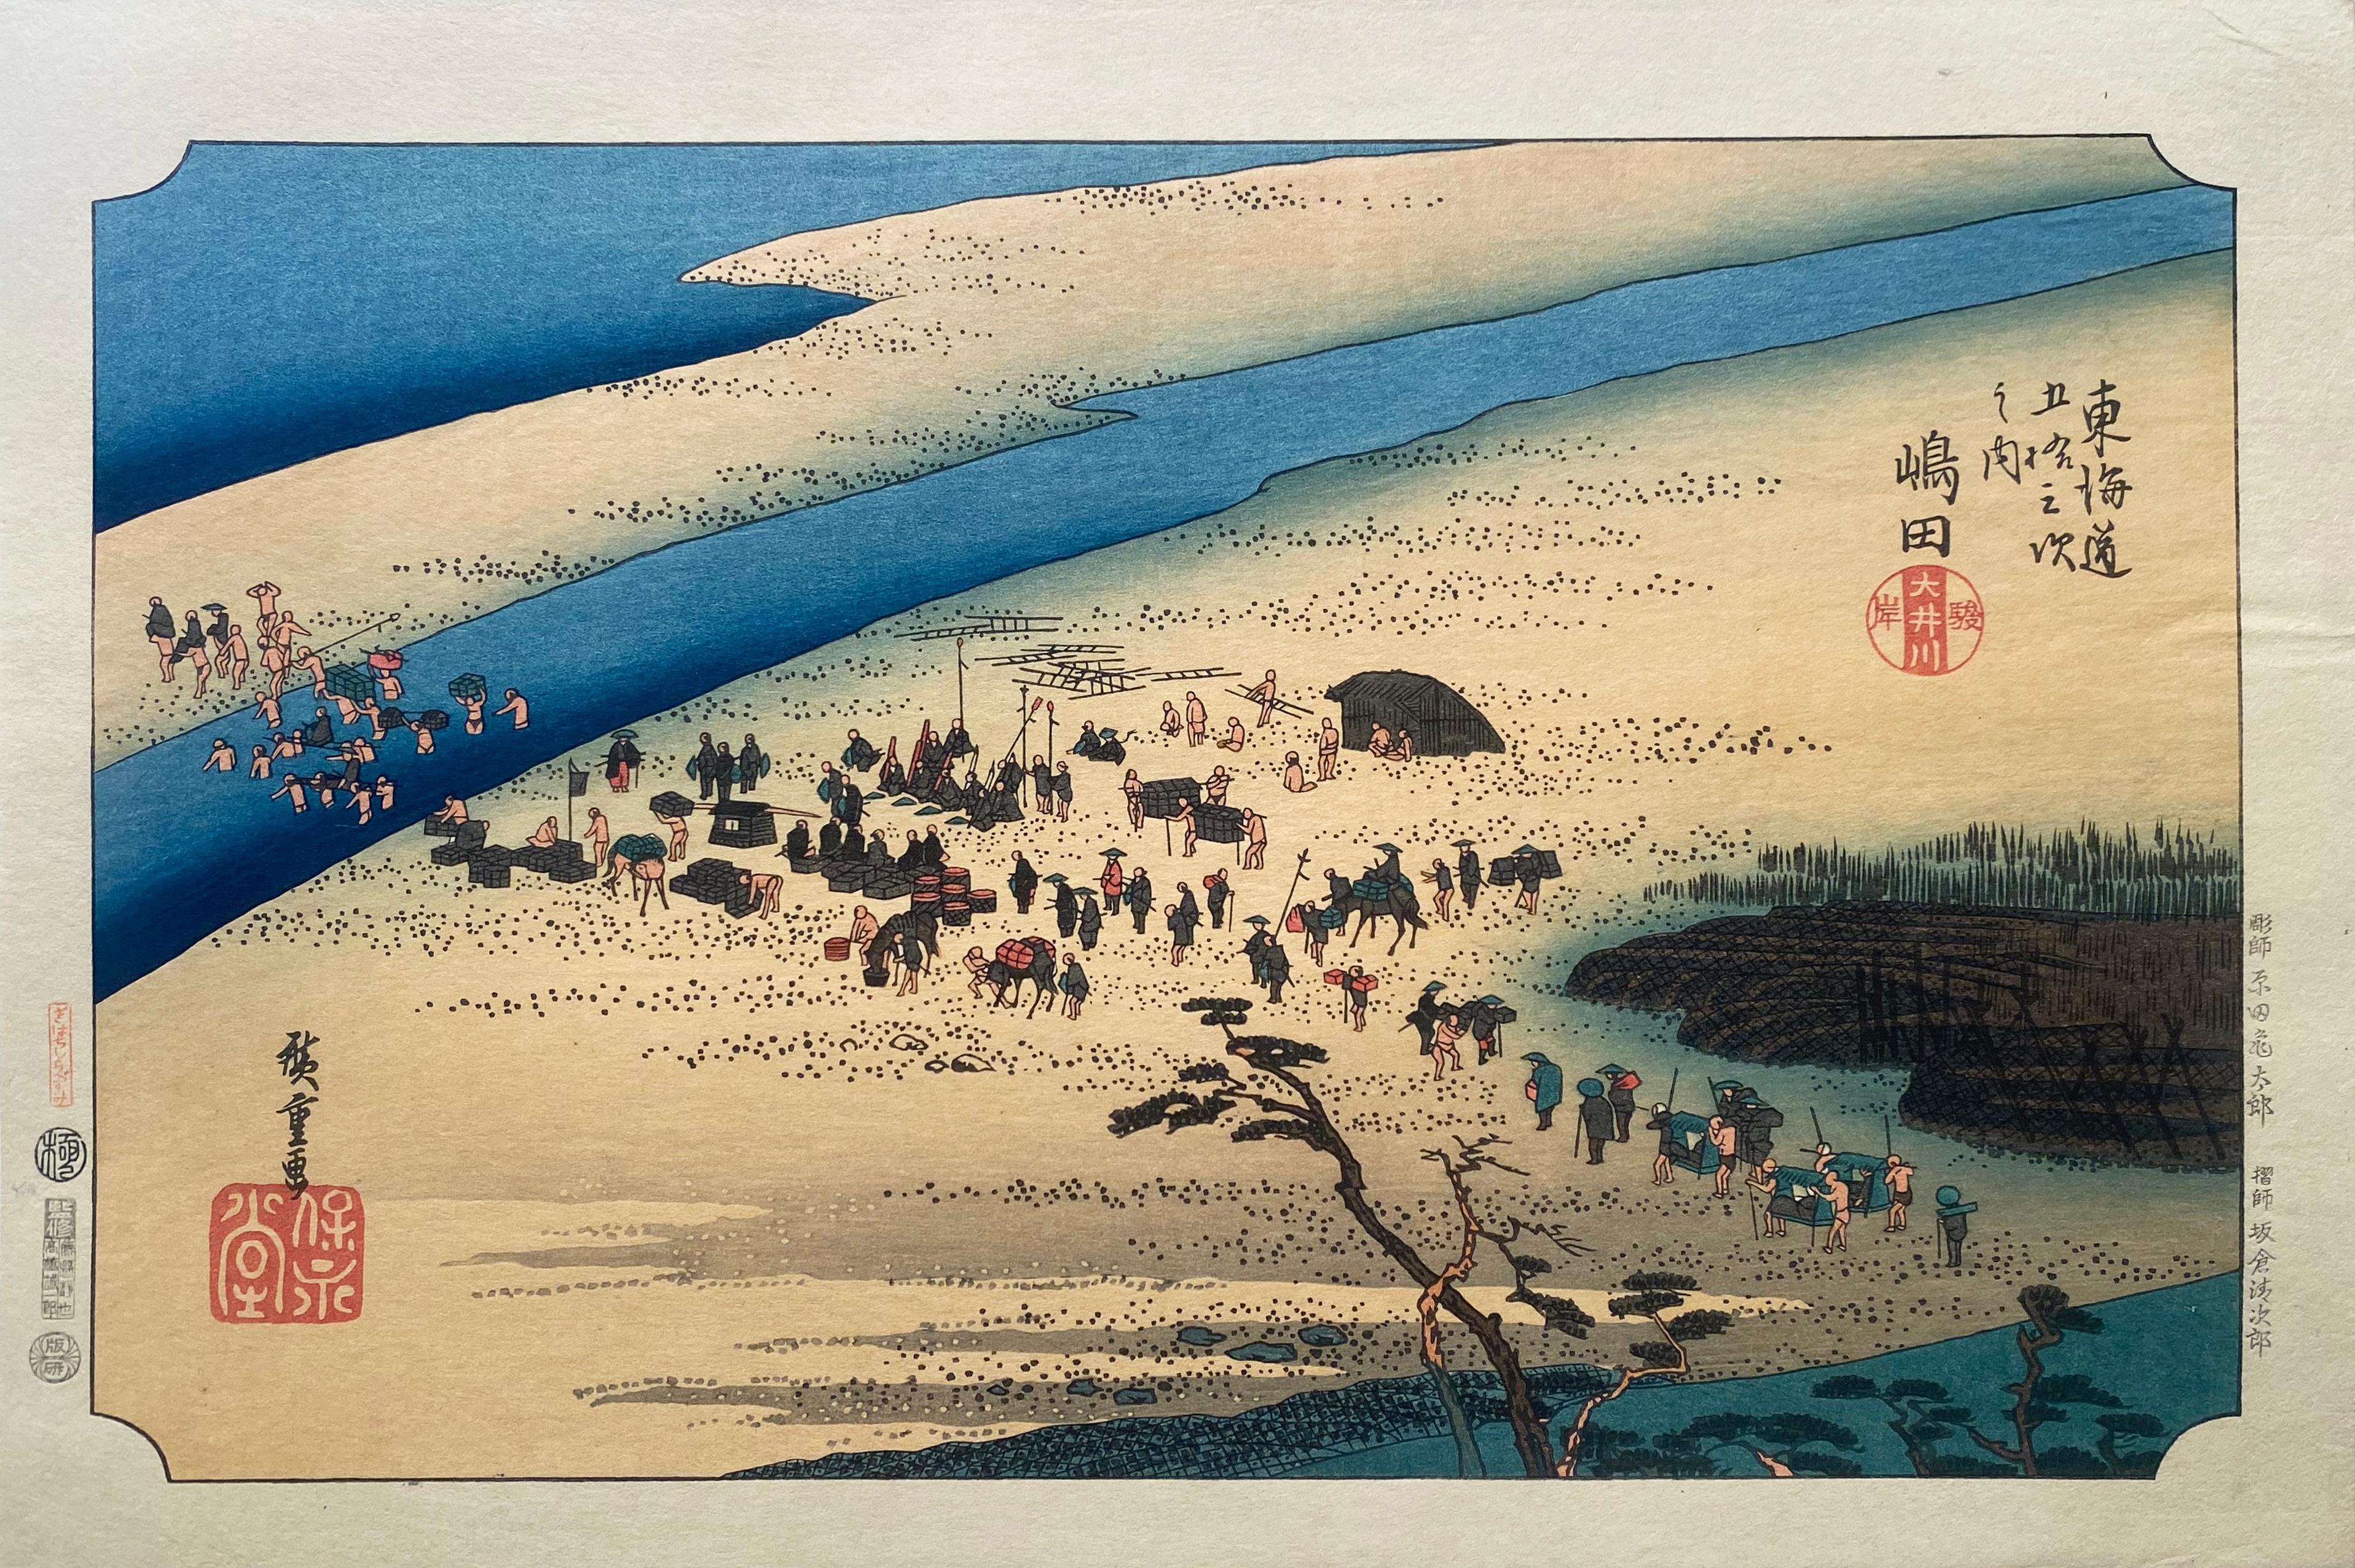 Utagawa Hiroshige (Ando Hiroshige) Landscape Print - 'View of Shimada', After Utagawa Hiroshige 歌川廣重, Ukiyo-e Woodblock, Tokaido